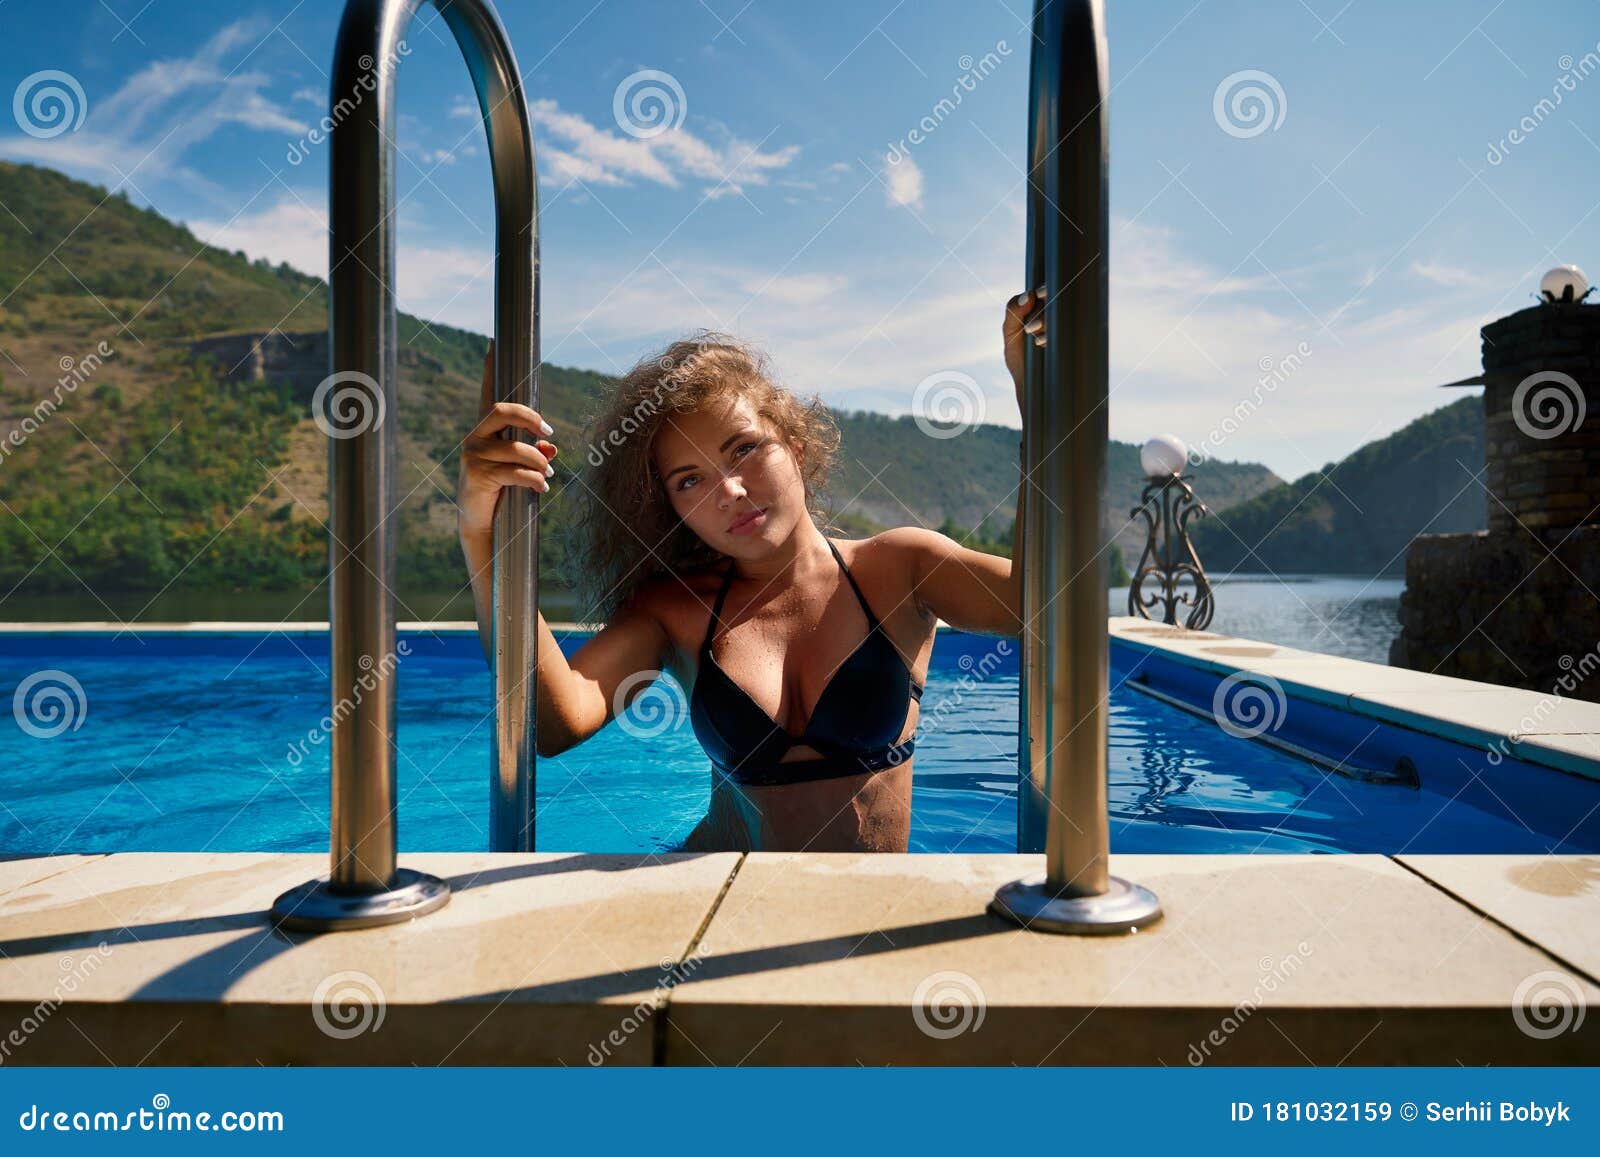 Девчонка на фоне бассейна